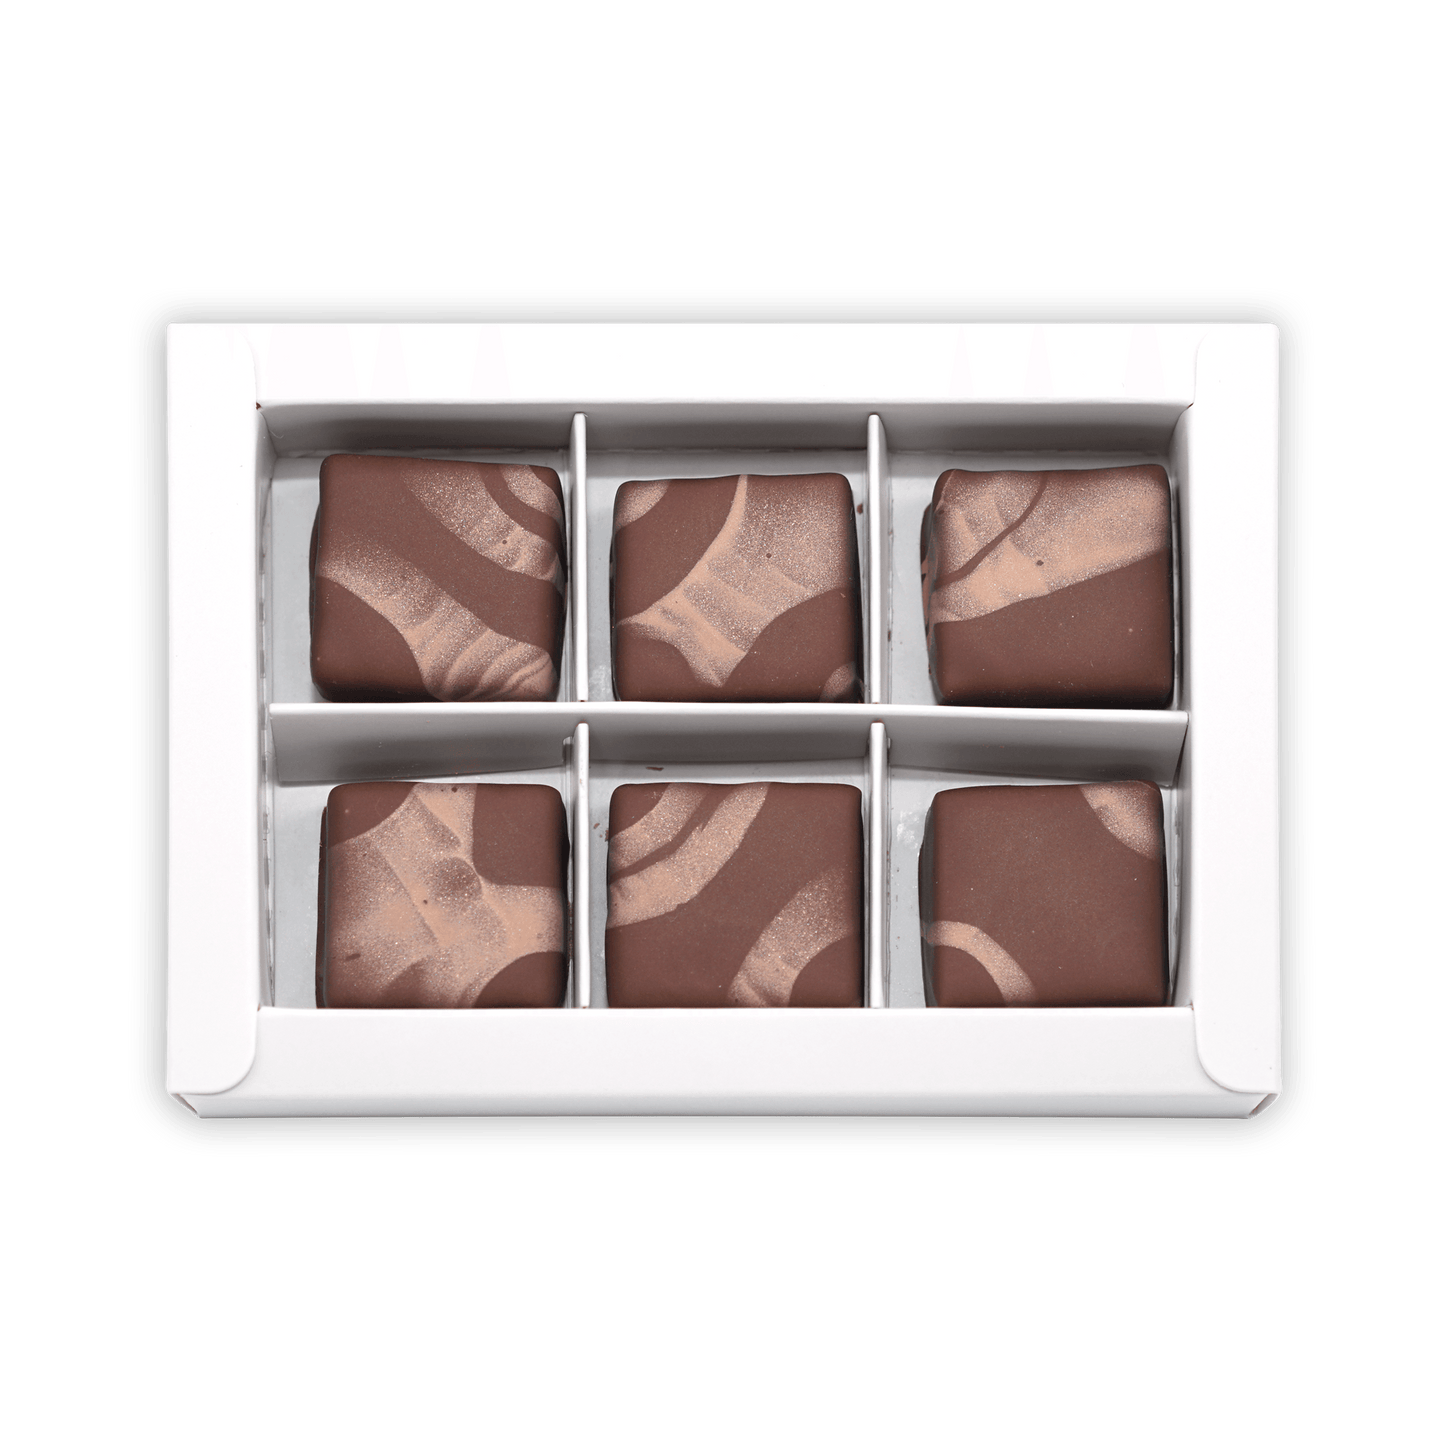 Fjåk Chocolate Coated Brown Cheese Caramels (6 pcs)